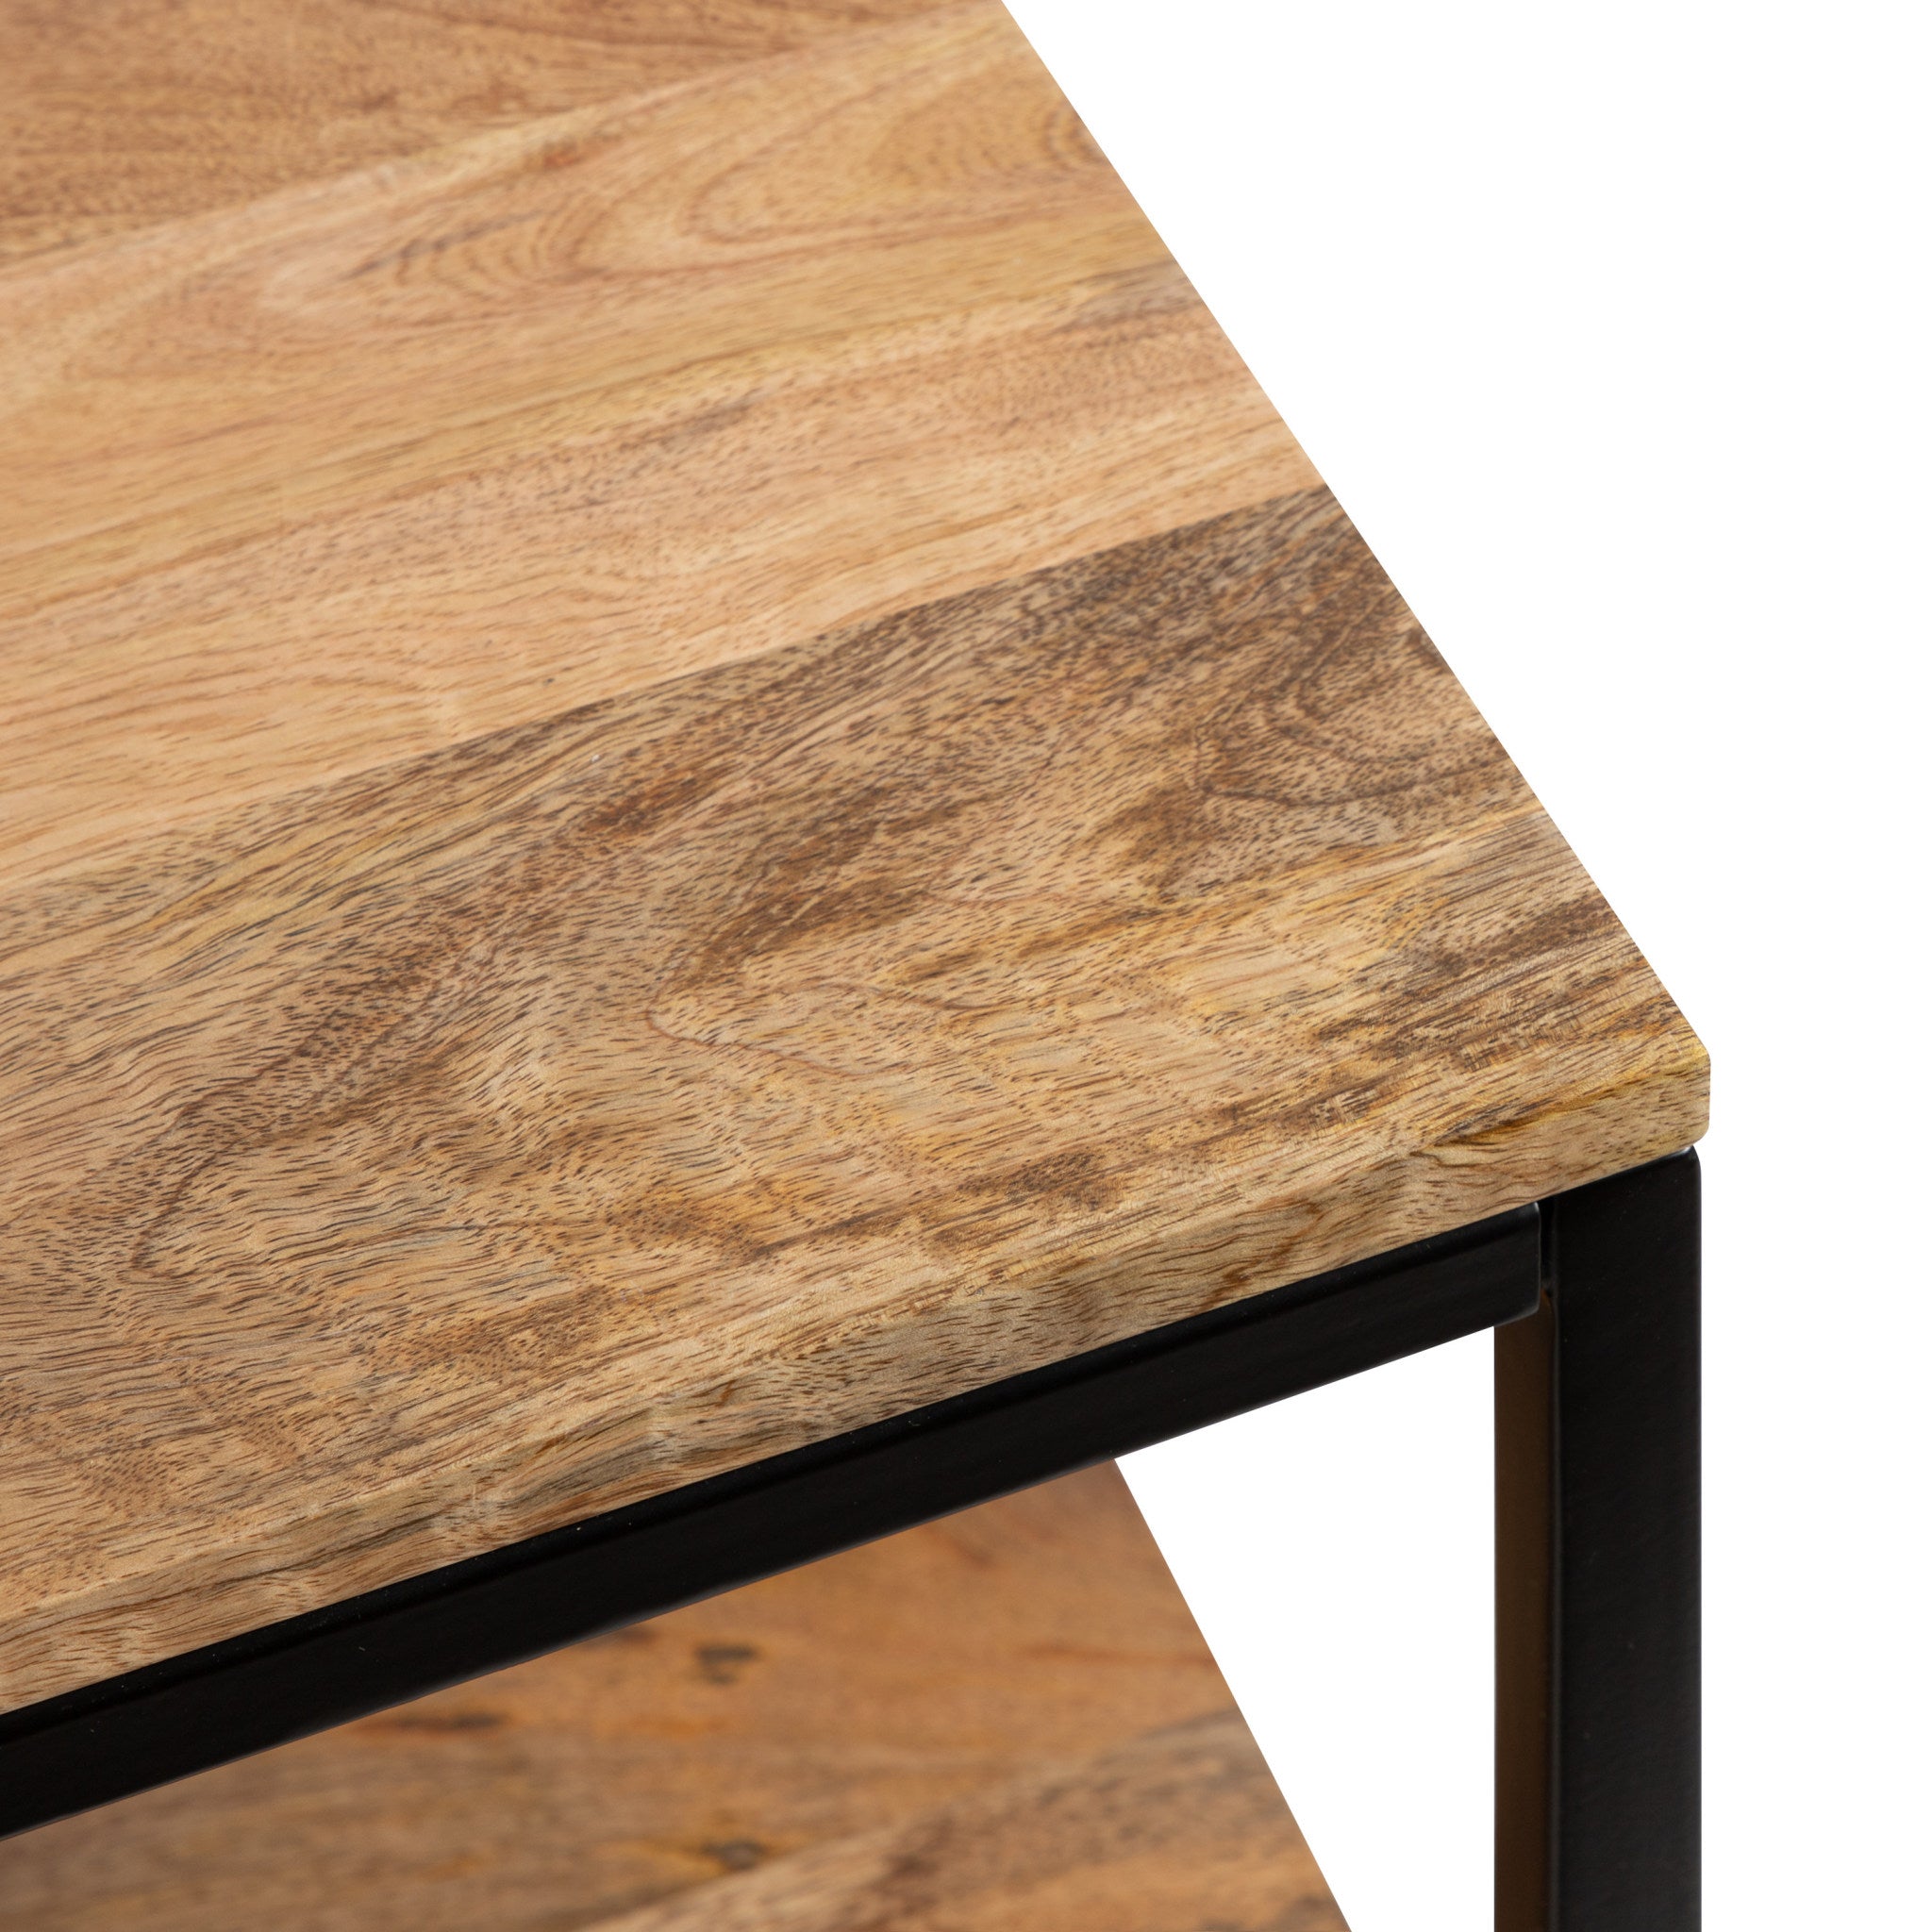 Quarles Wood and Metal Side Table